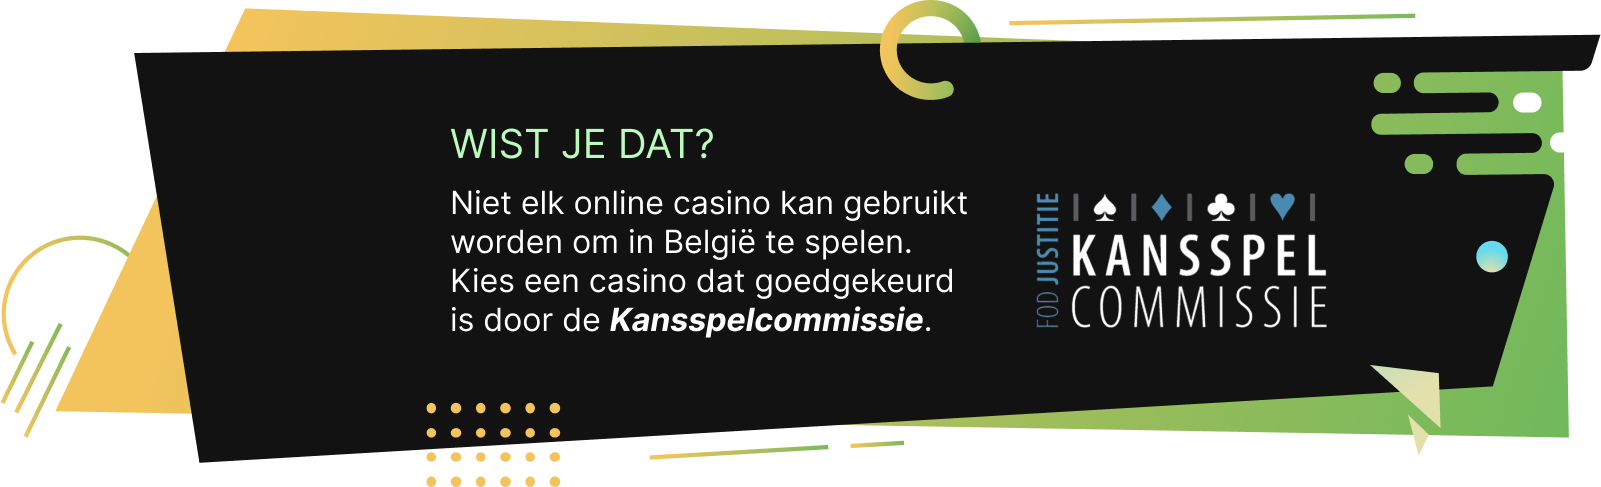 Kansspelcommissie   Online Casinos Vergunningen in België om legaal te spelen